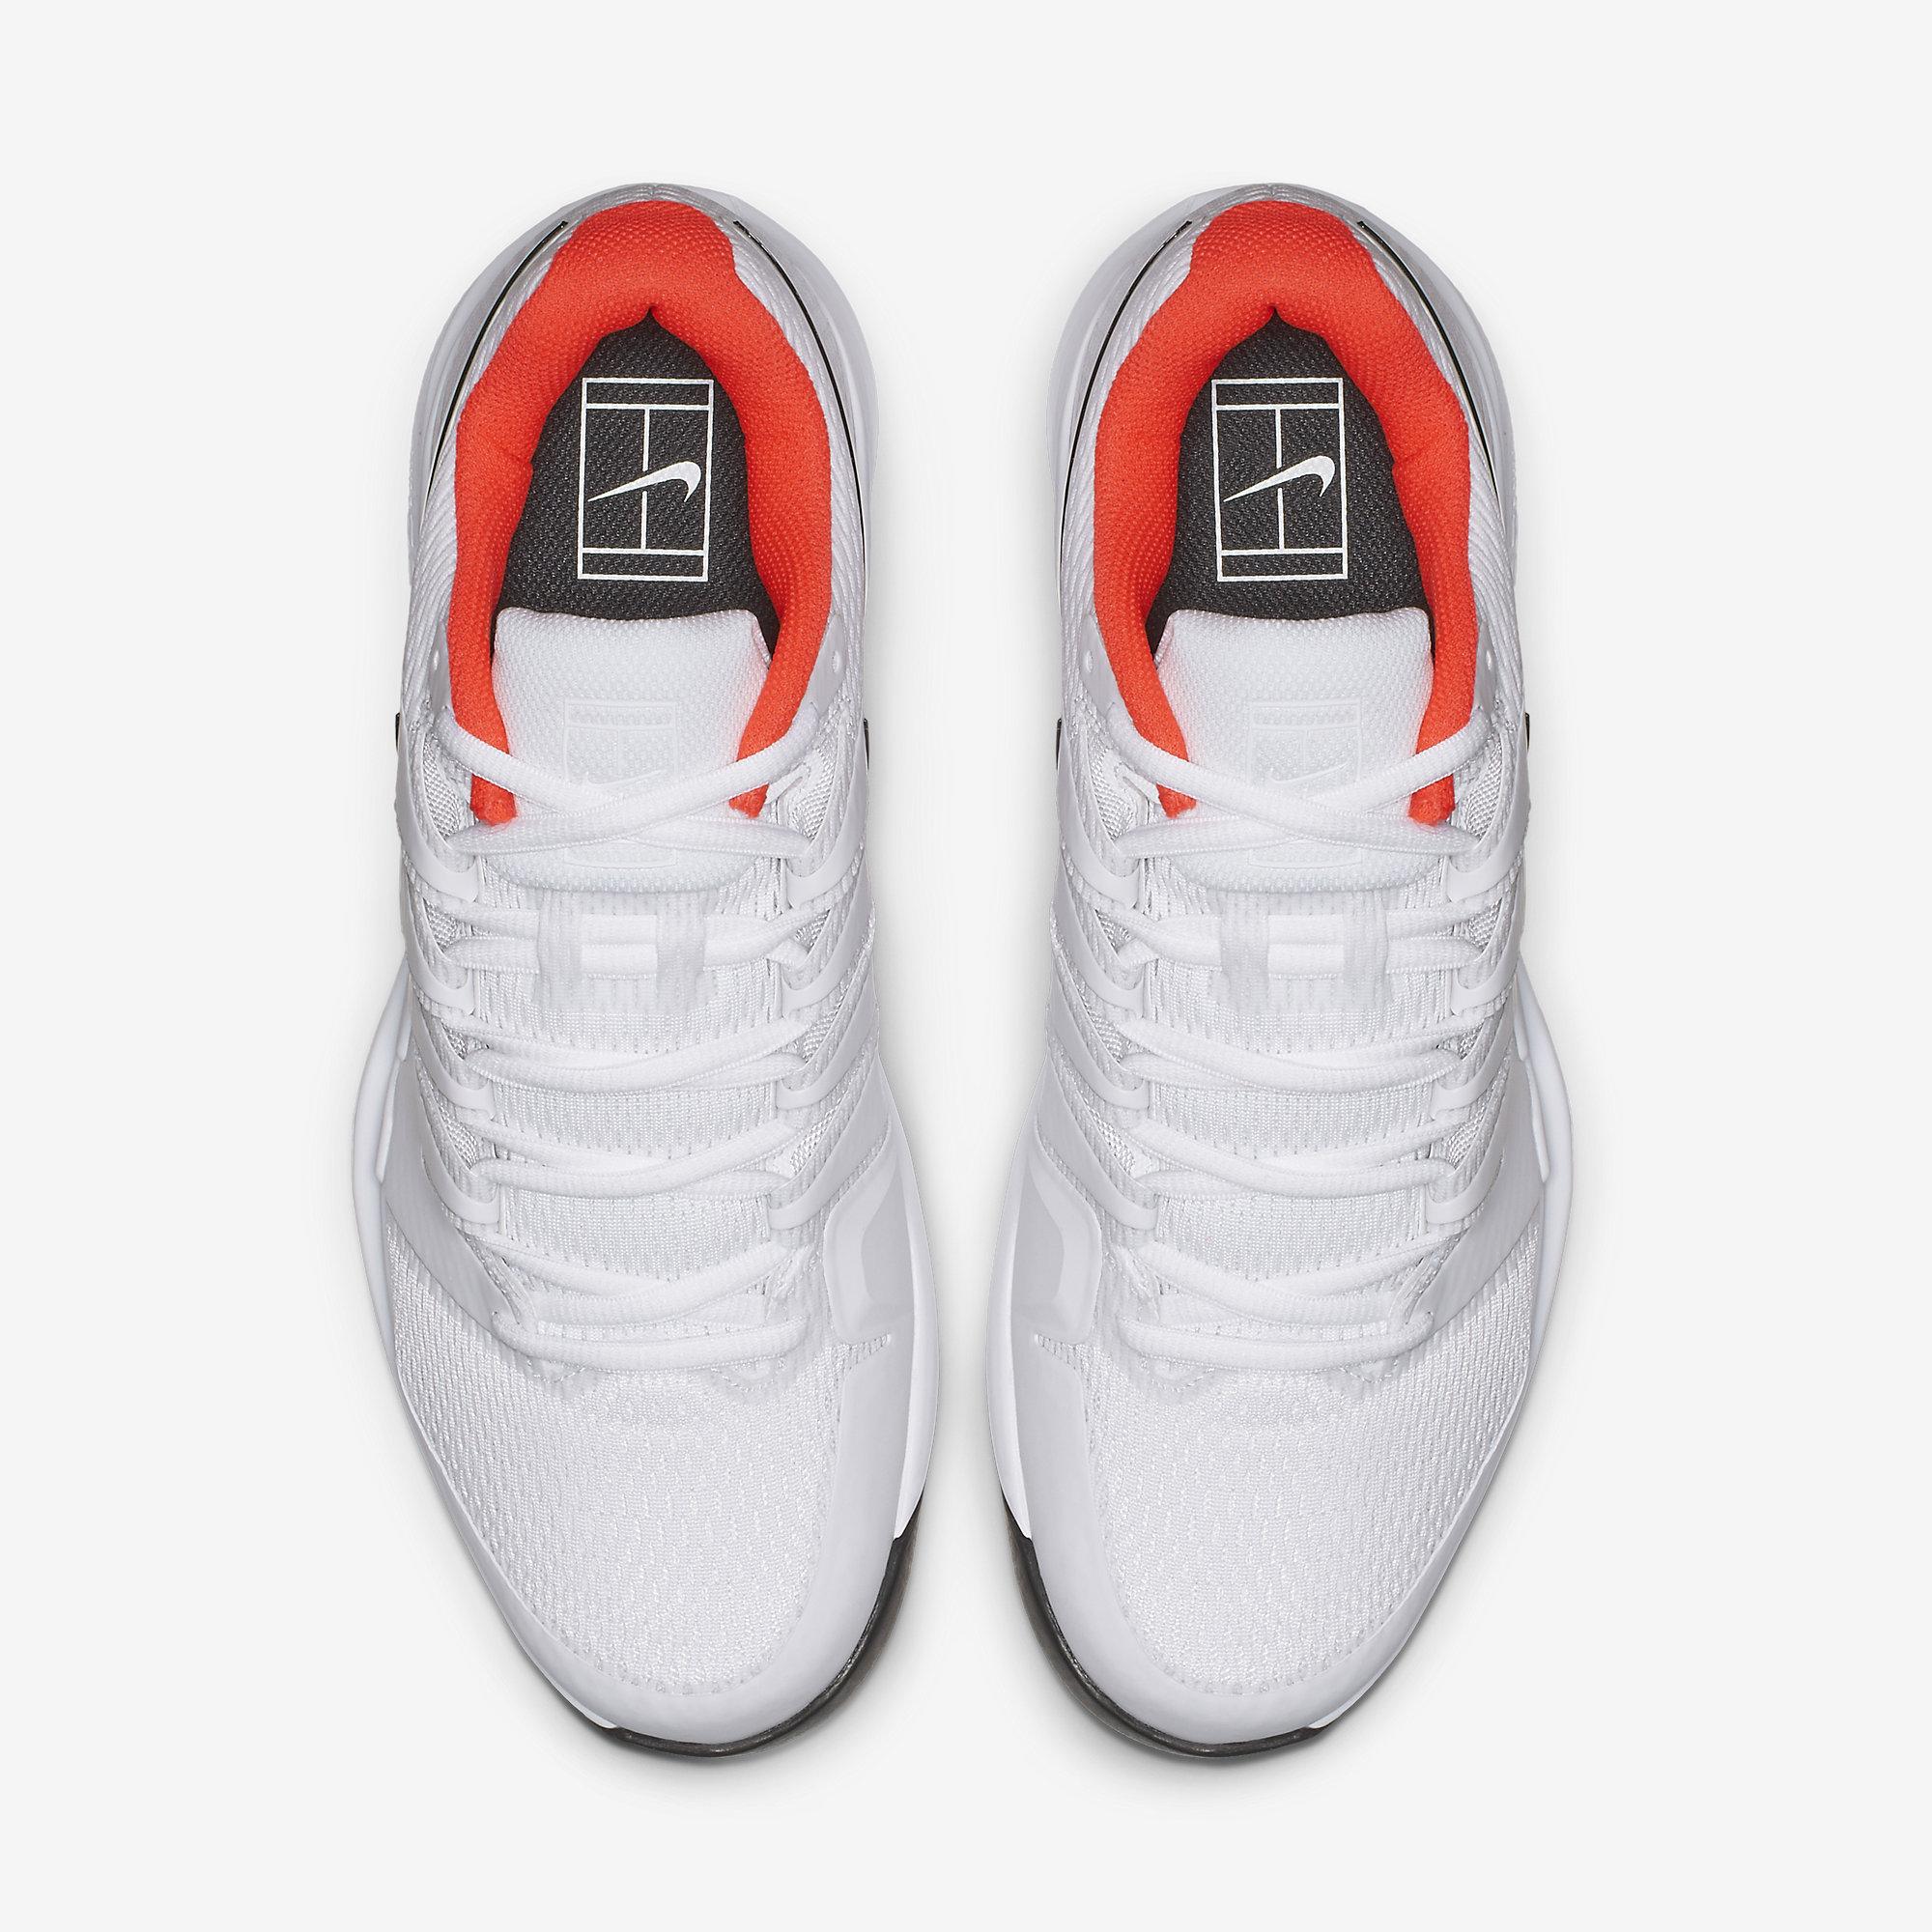 Nike Mens Air Zoom Vapor X Tennis Shoes - White/Bright Crimson/Black ...